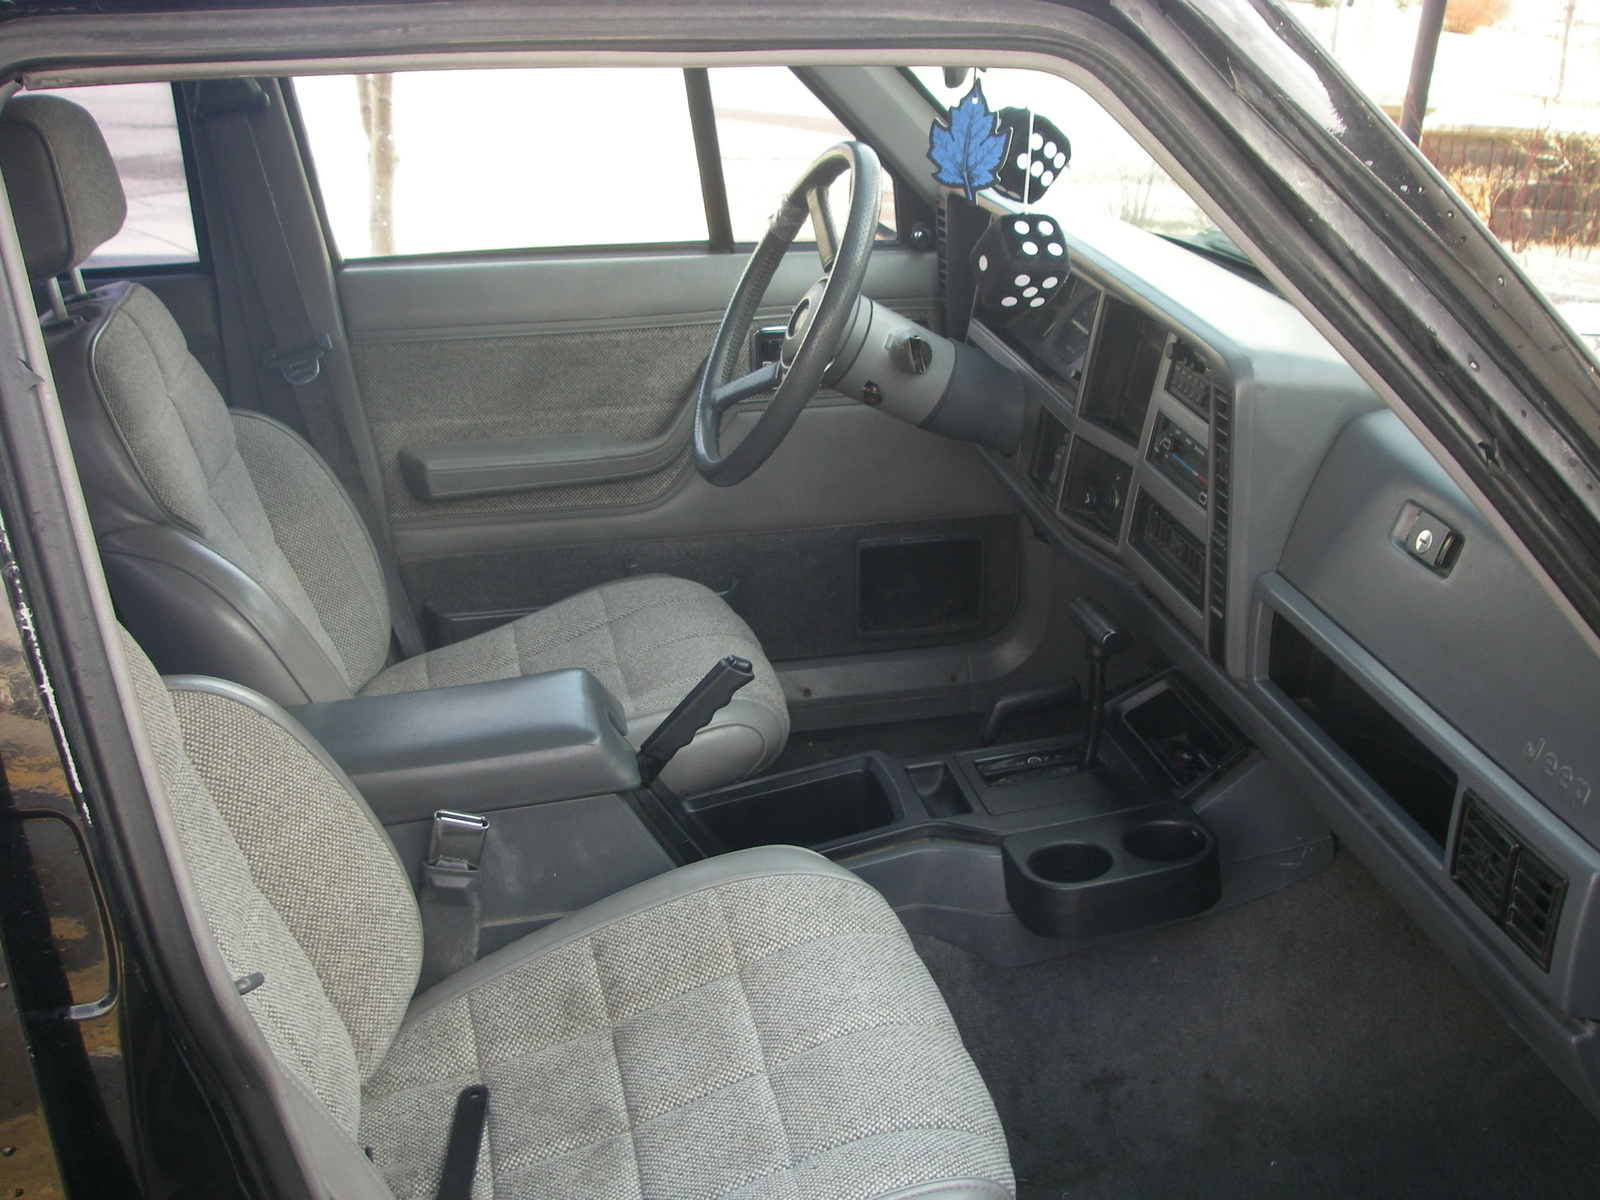 1992 Jeep cherokee laredo interior #1